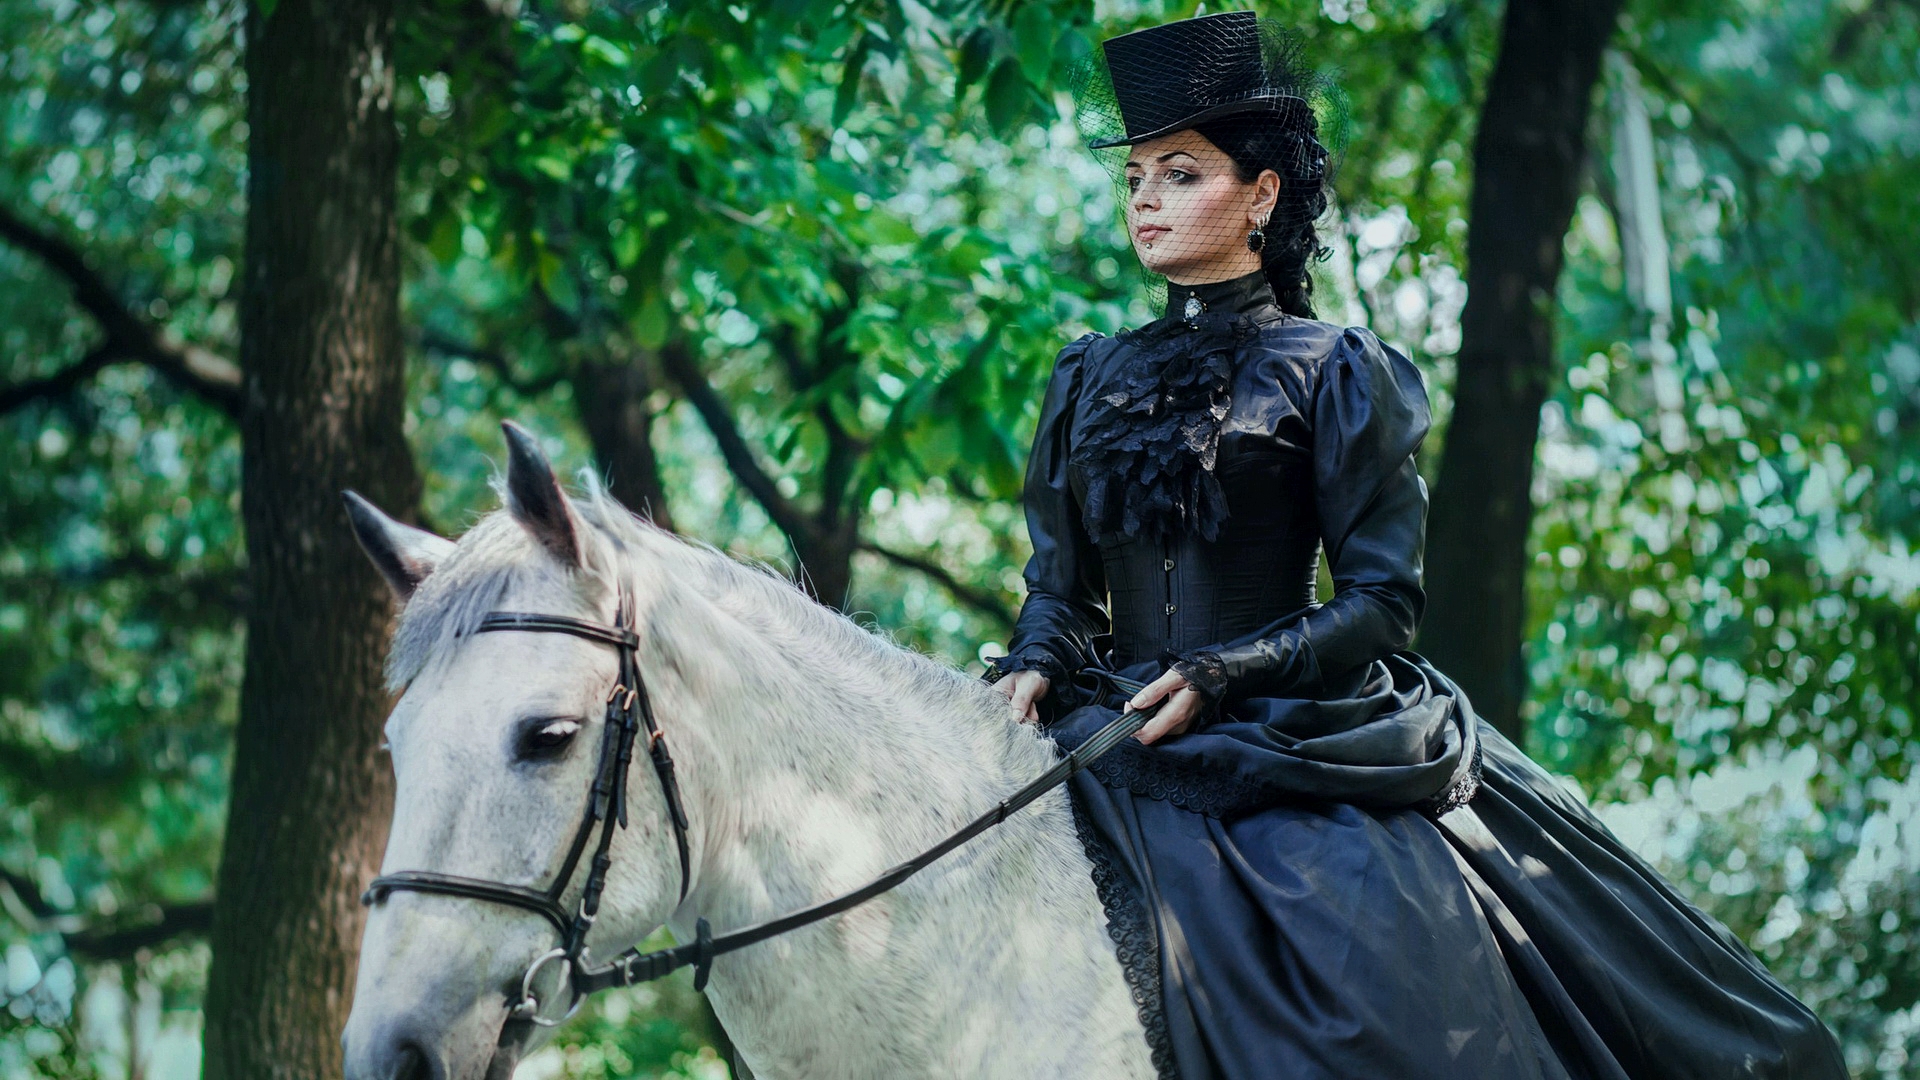 Model Katerina Baumgertner on horseback in the woods